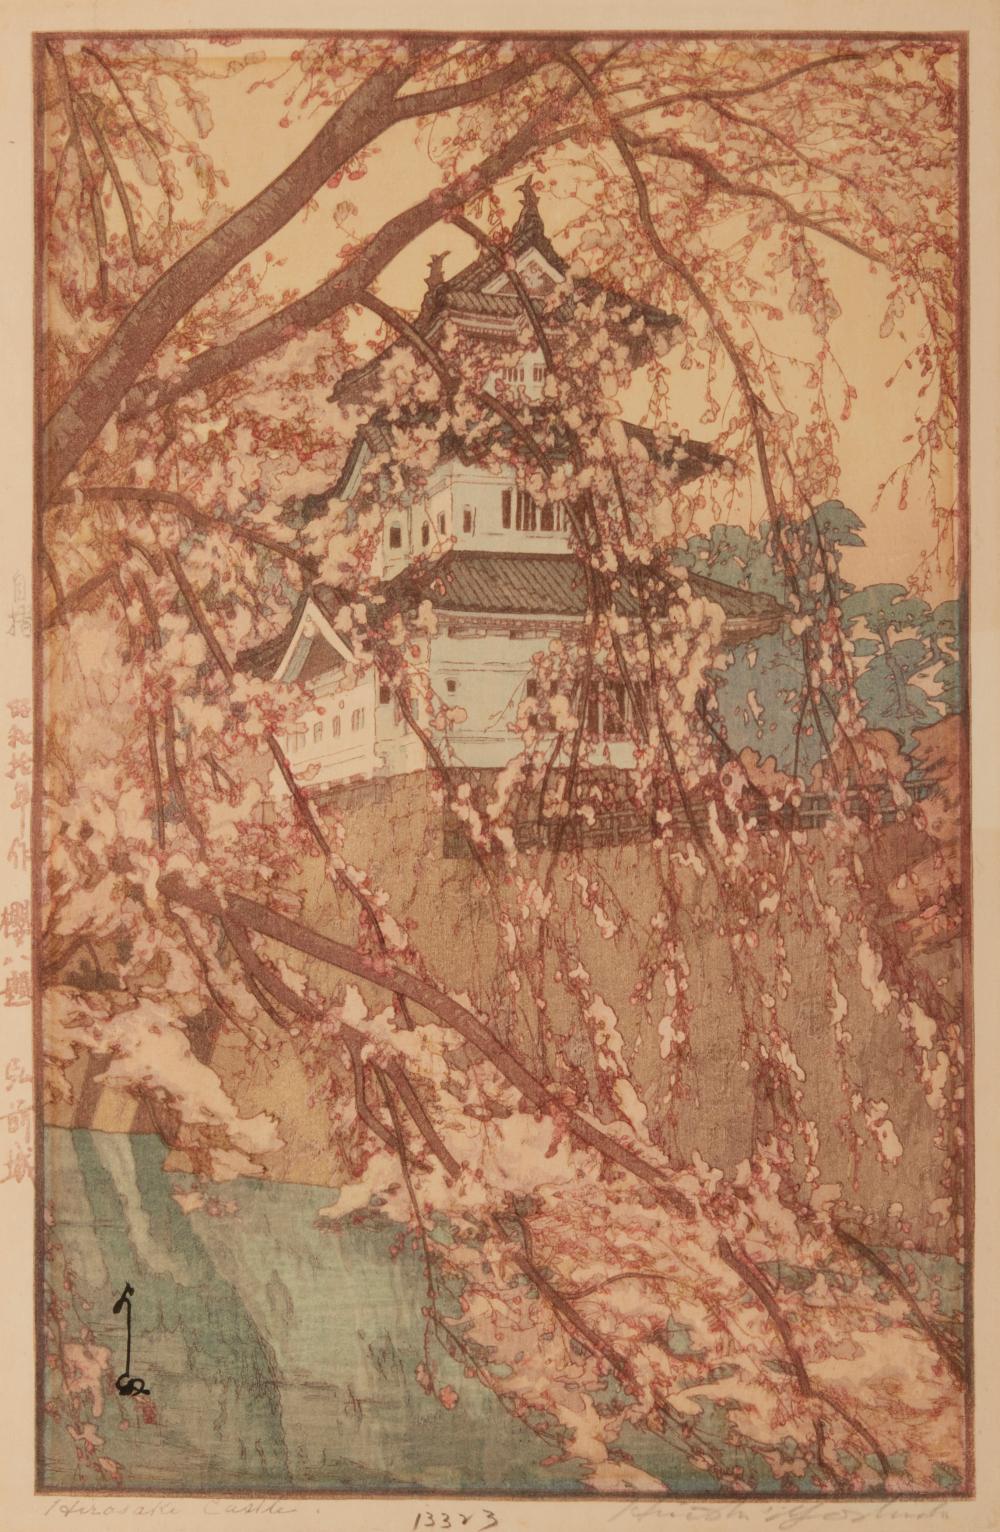 HIROSHI YOSHIDA (1876-1950), "HIROSAKE